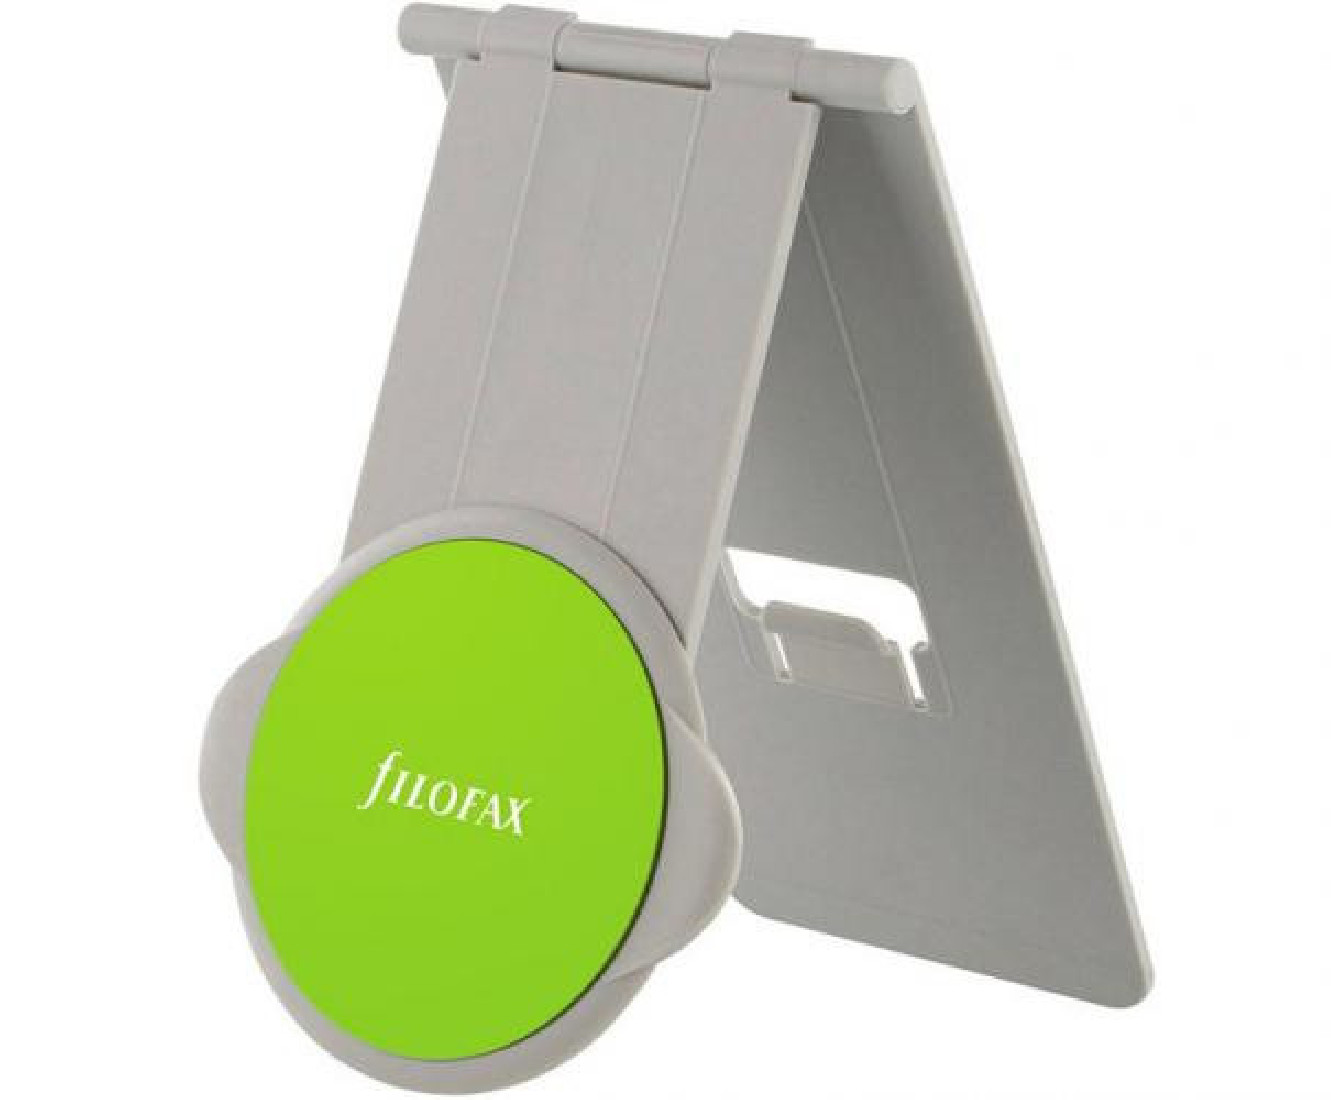 Filofax eniTAB360 Universal Tablet Holder Stone